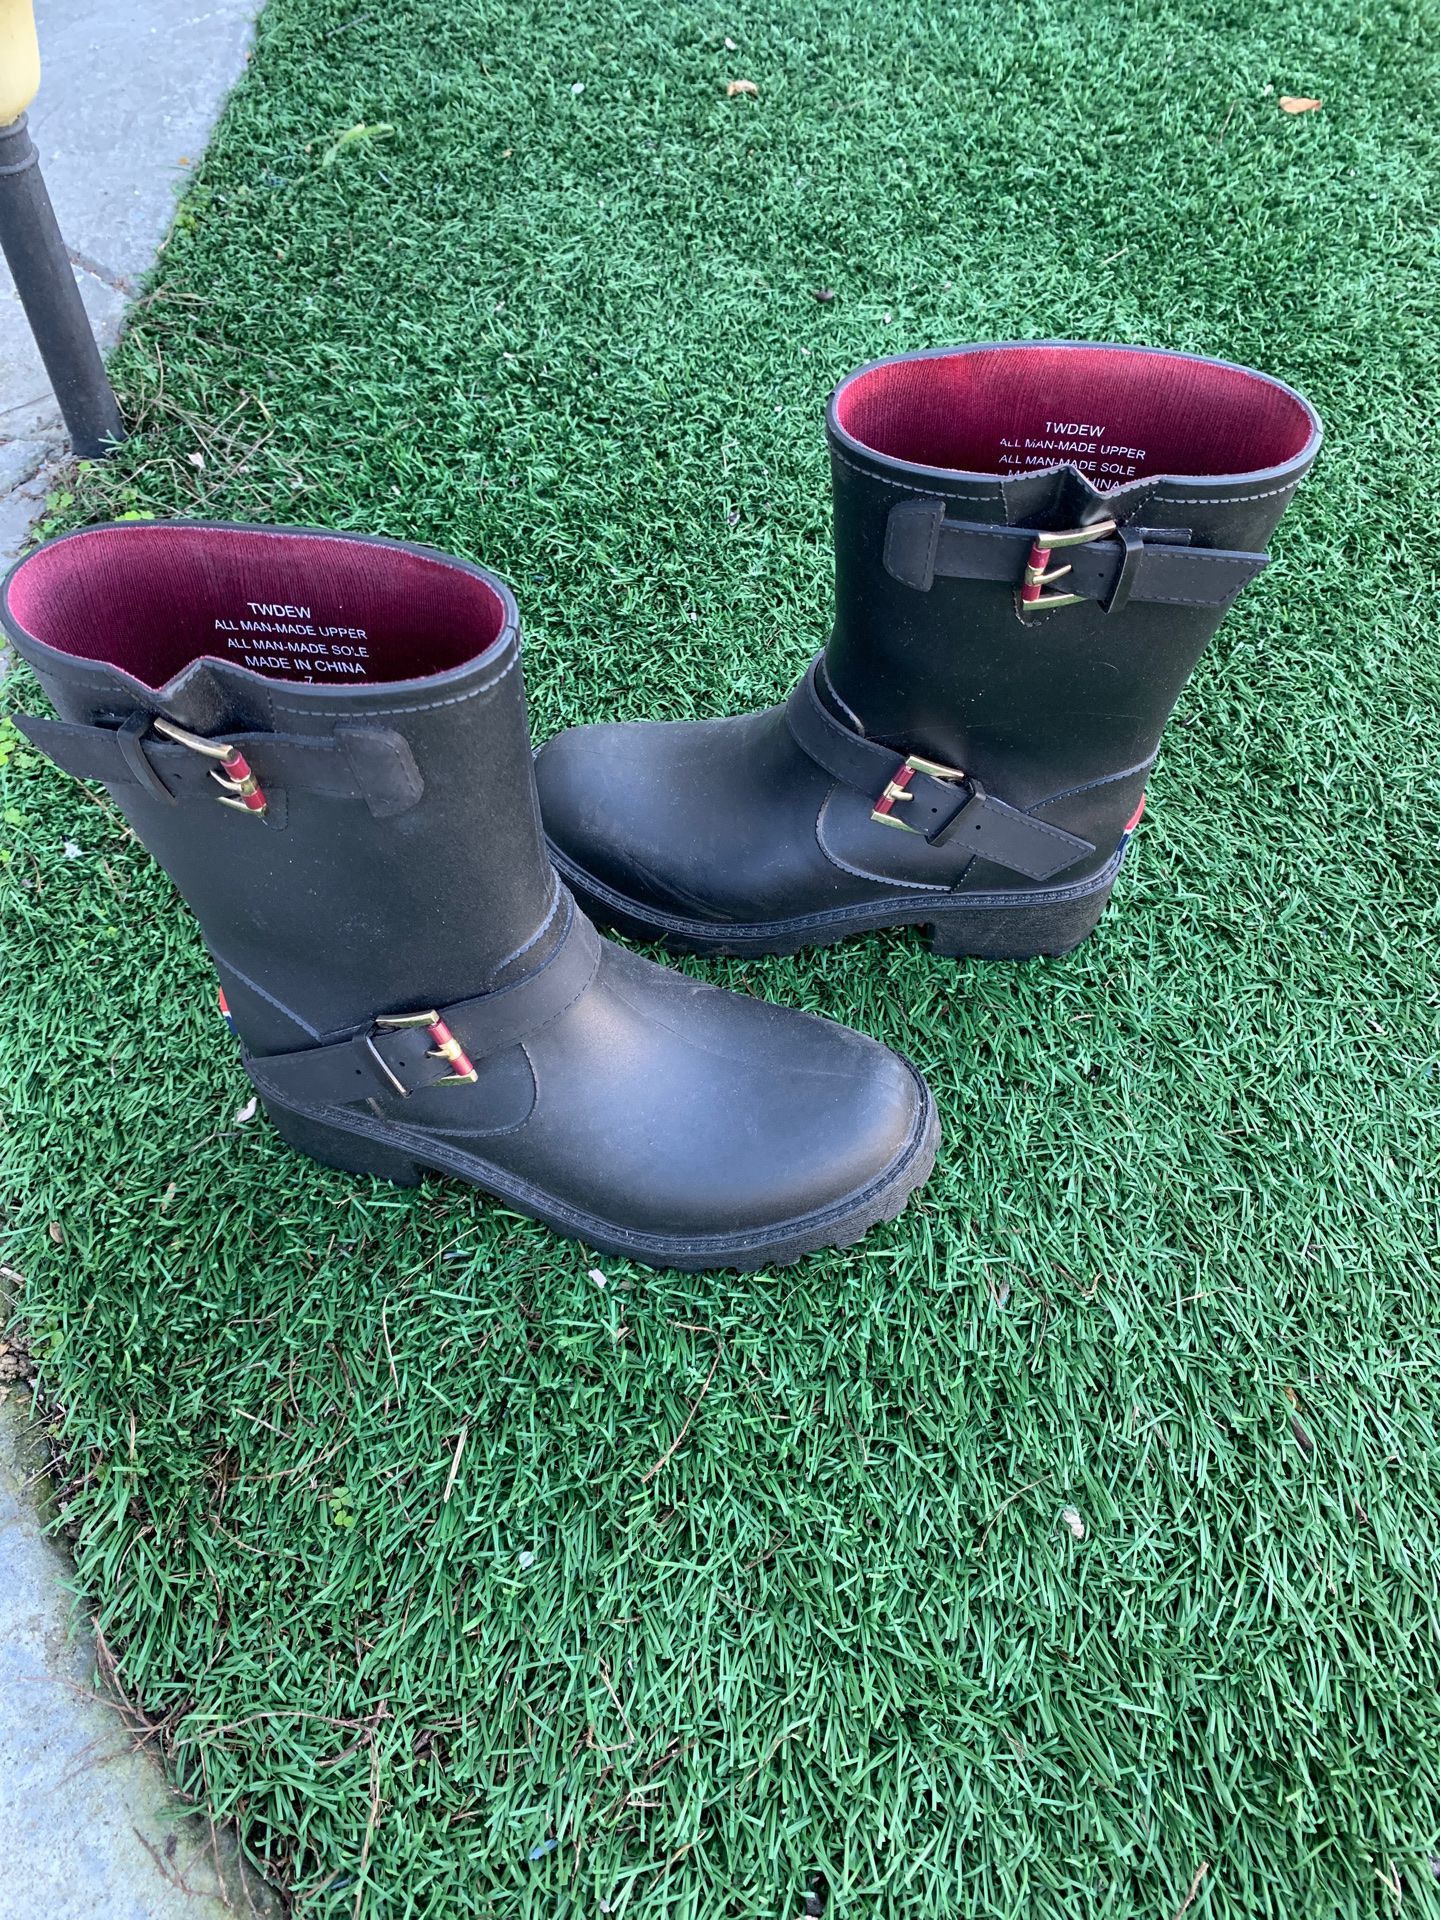 Tommy Hilfiger Size 7 Women’s Rain Boots (Wellingtons)